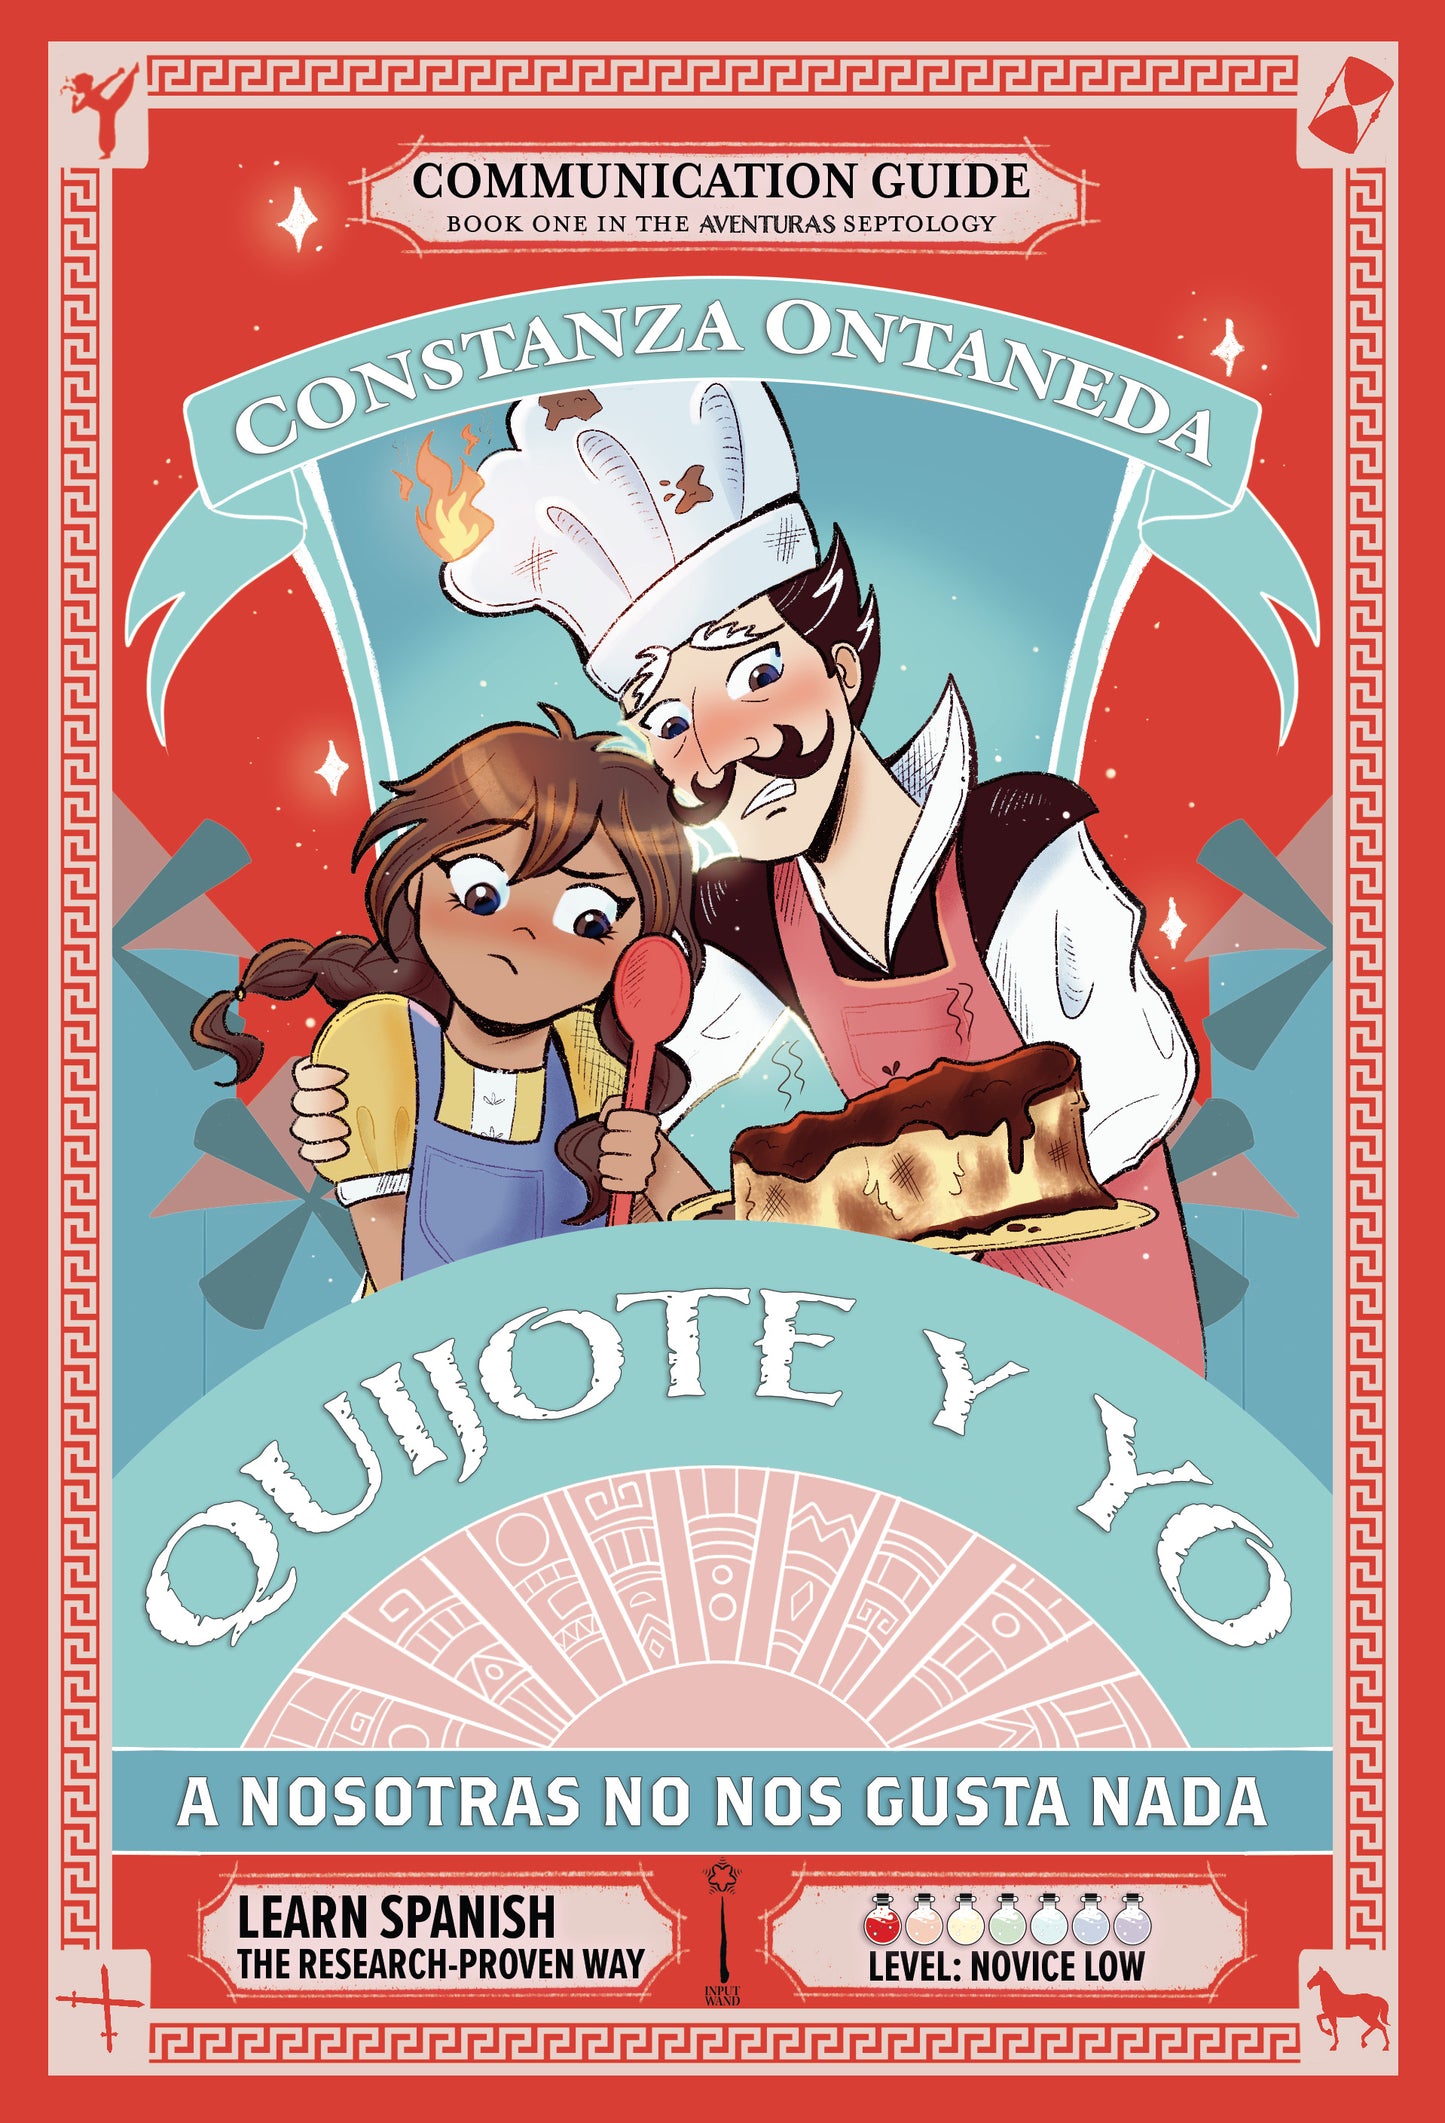 Communication Guide: Quijote y Yo: A Nosotras No Nos Gusta Nada, Book One in the Novice Low "Aventuras" Septology